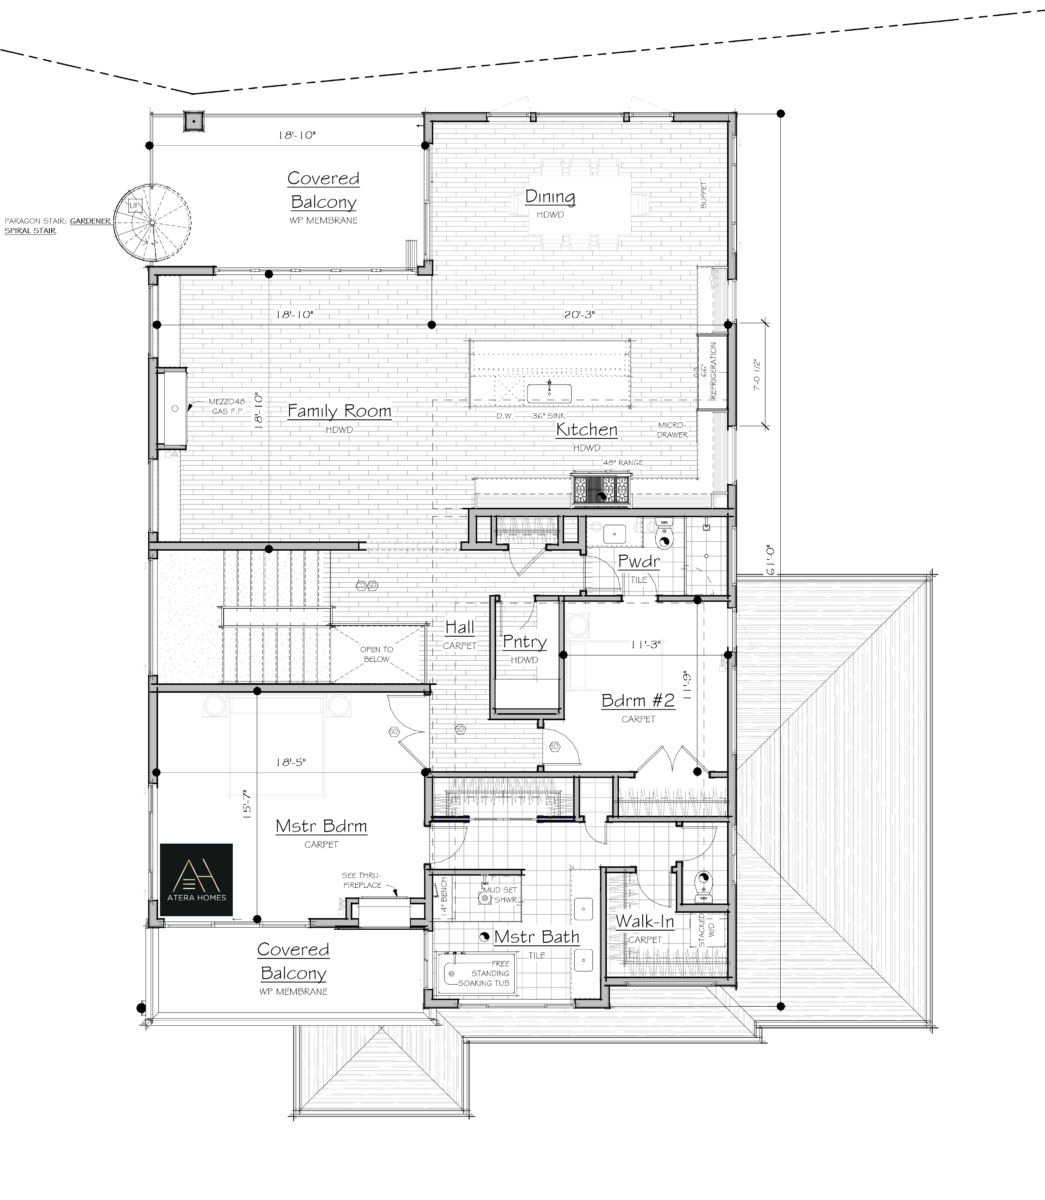 20011-05 Kerker Residence, Issaquah - Floor Plan - Marketing, Level 2